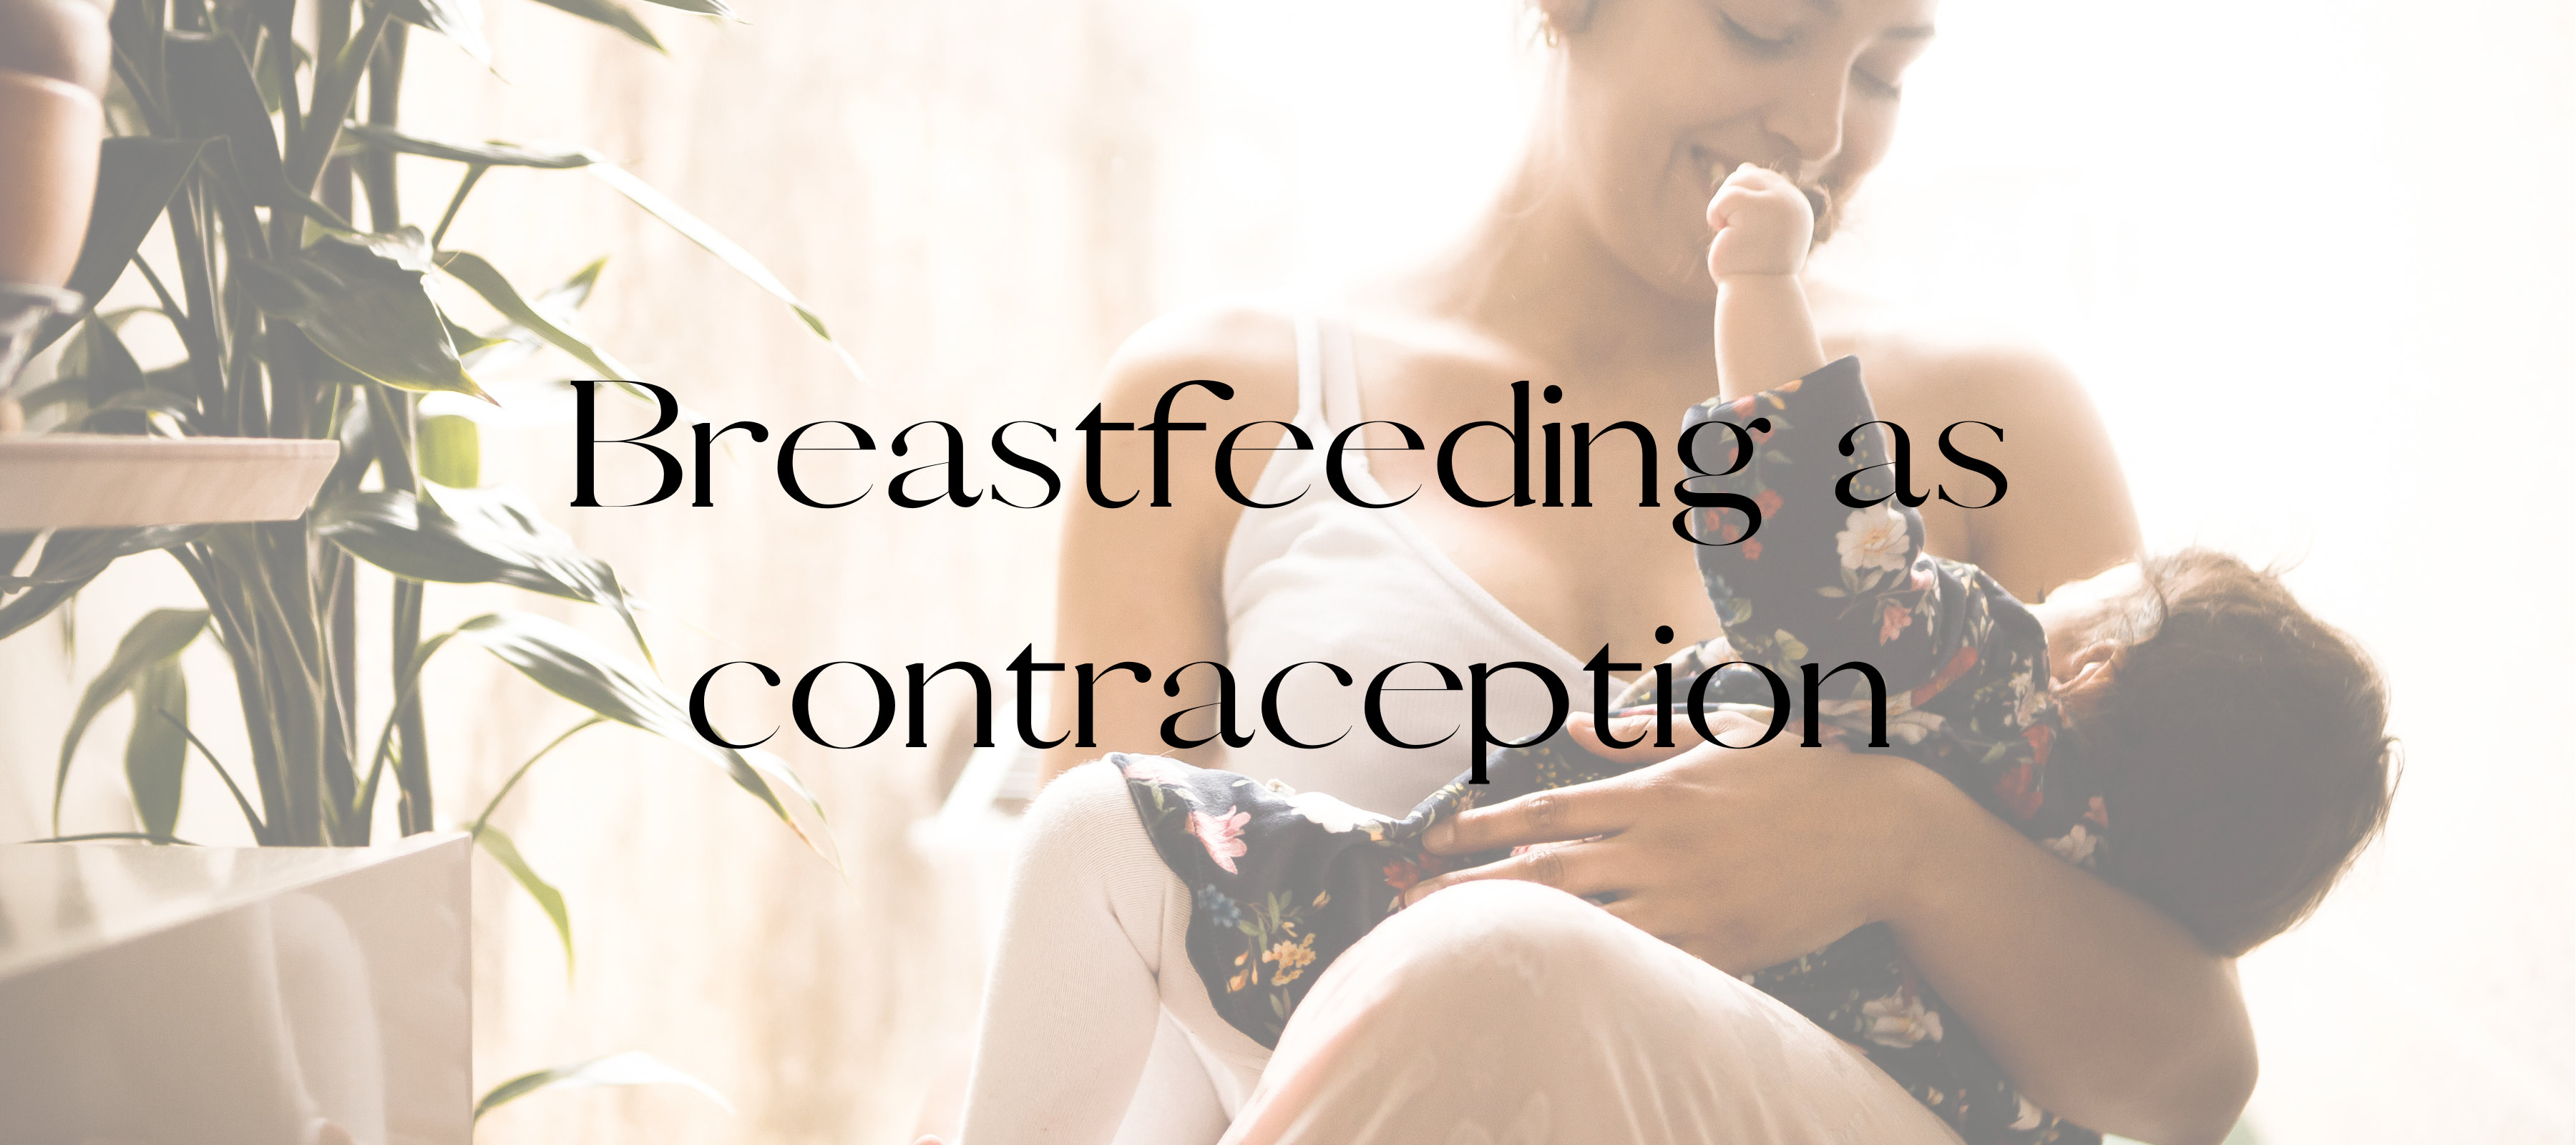 Breastfeeding as contraception